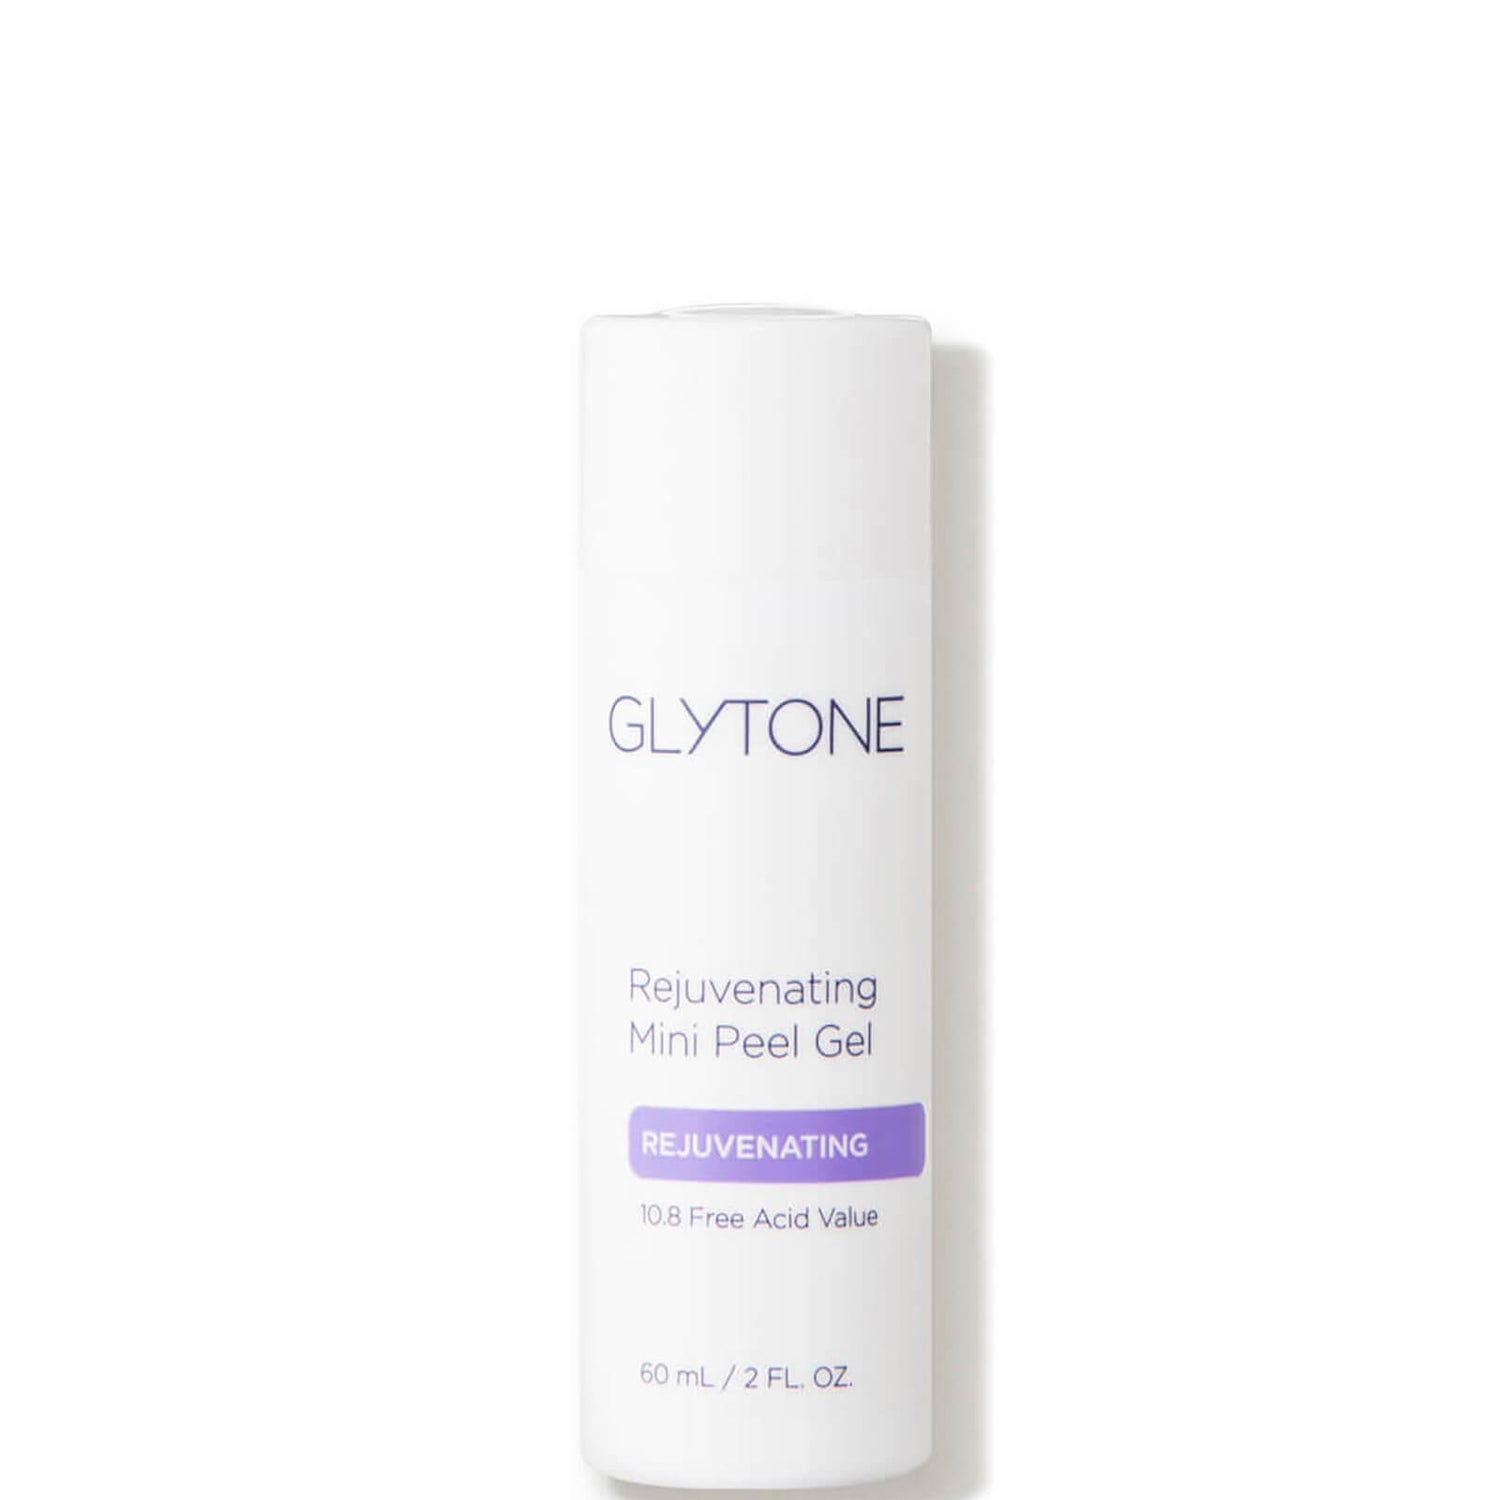 Glytone Rejuvenating Mini Peel Gel (2 fl. oz.)